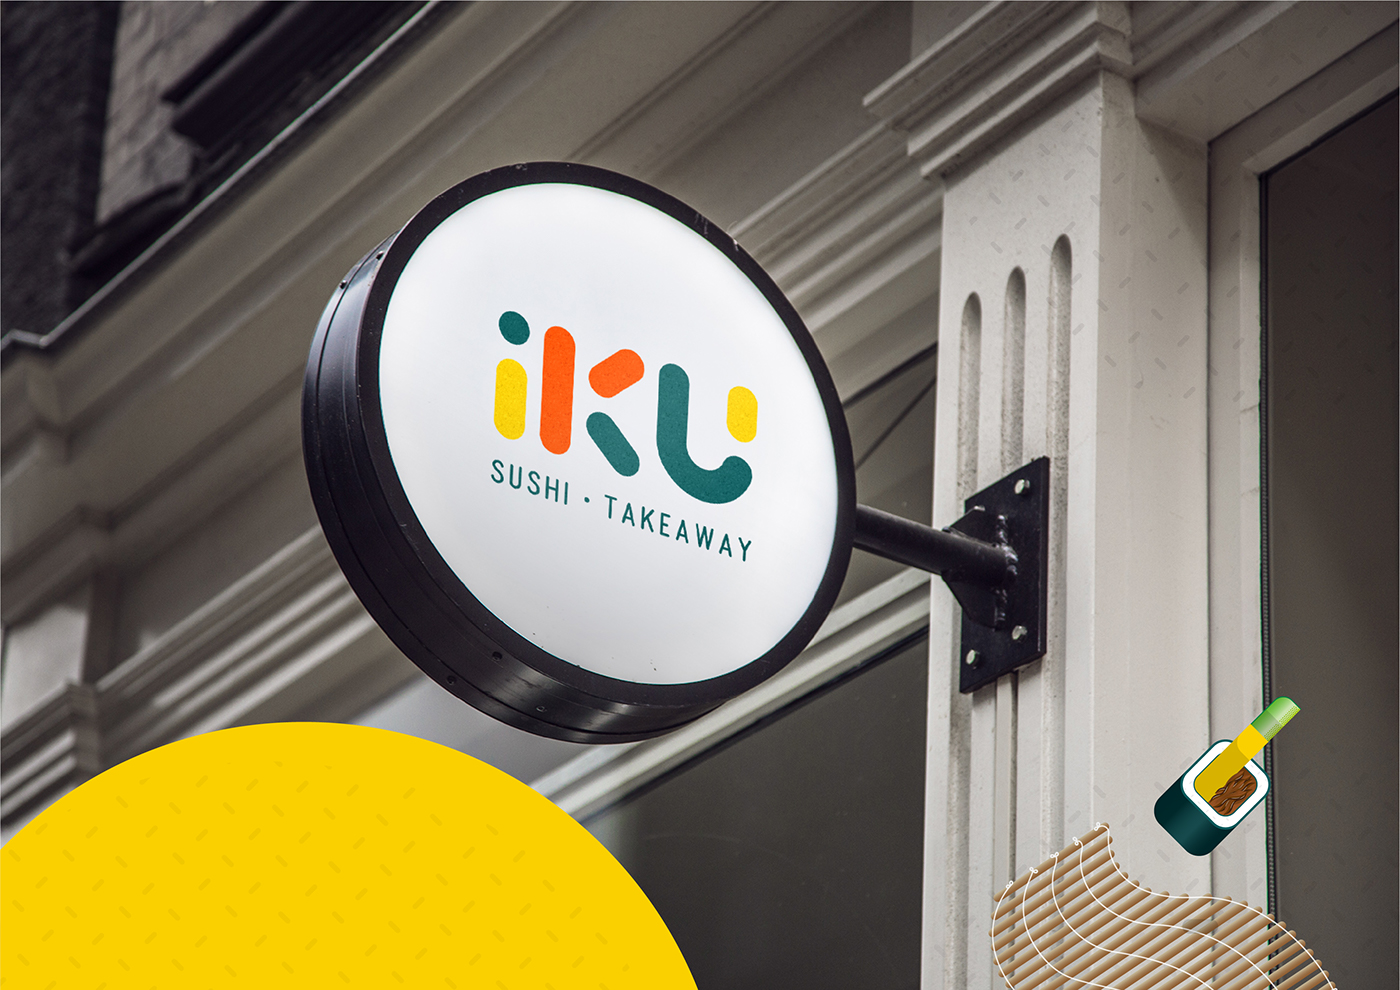 iku Sushi branding  ILLUSTRATION  japanese restaurant Logo Design Character design  sushi mascot eat cool